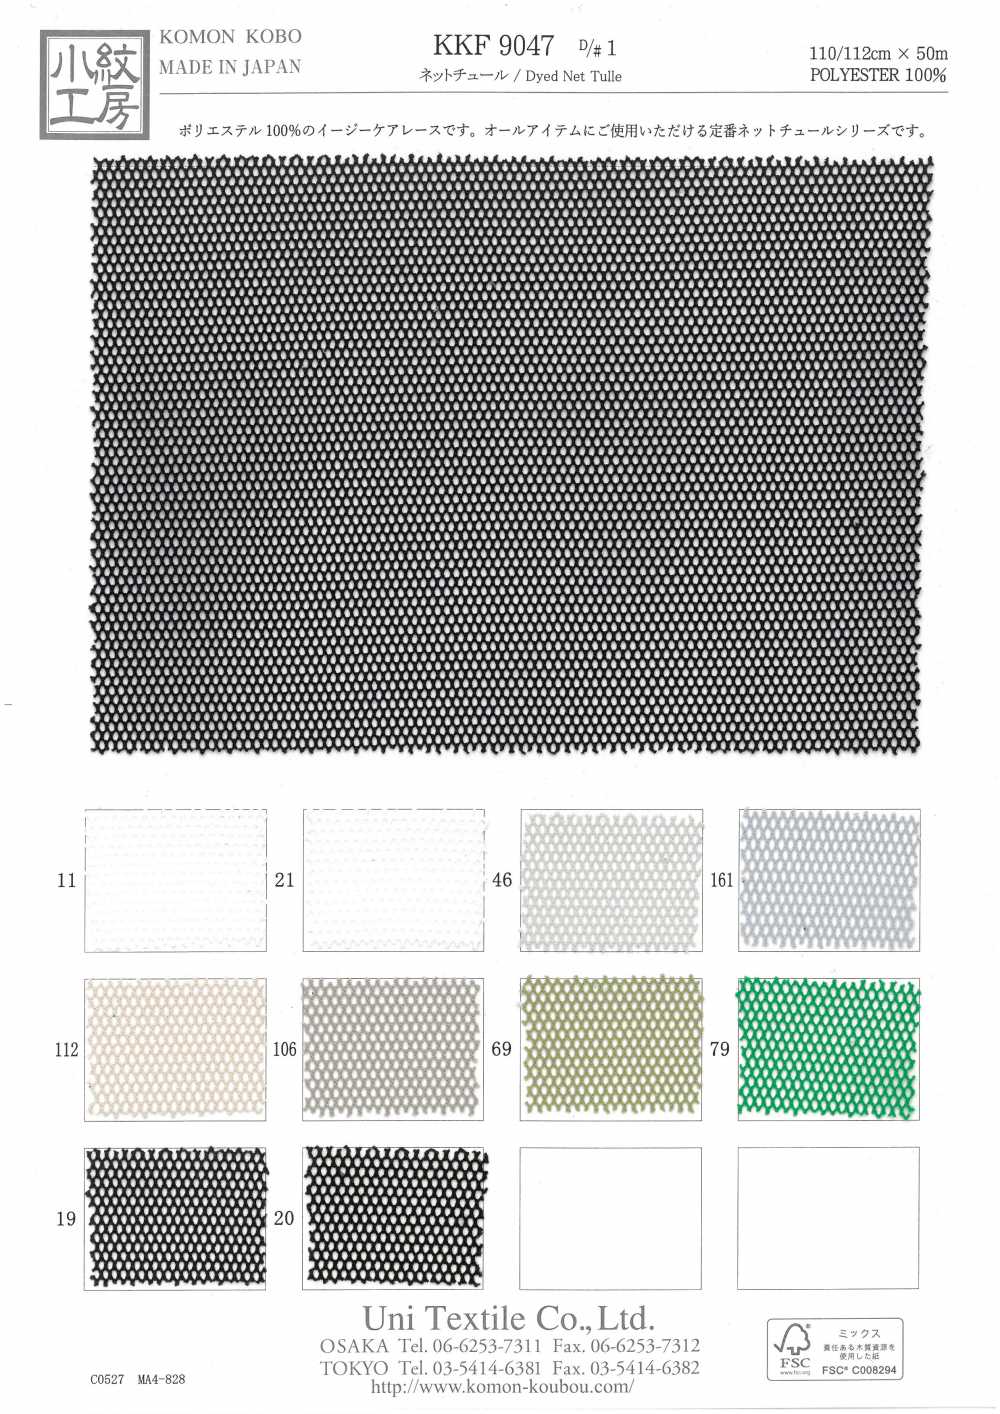 KKF9047-D/1 Vải Tuyn Lưới Uni Textile